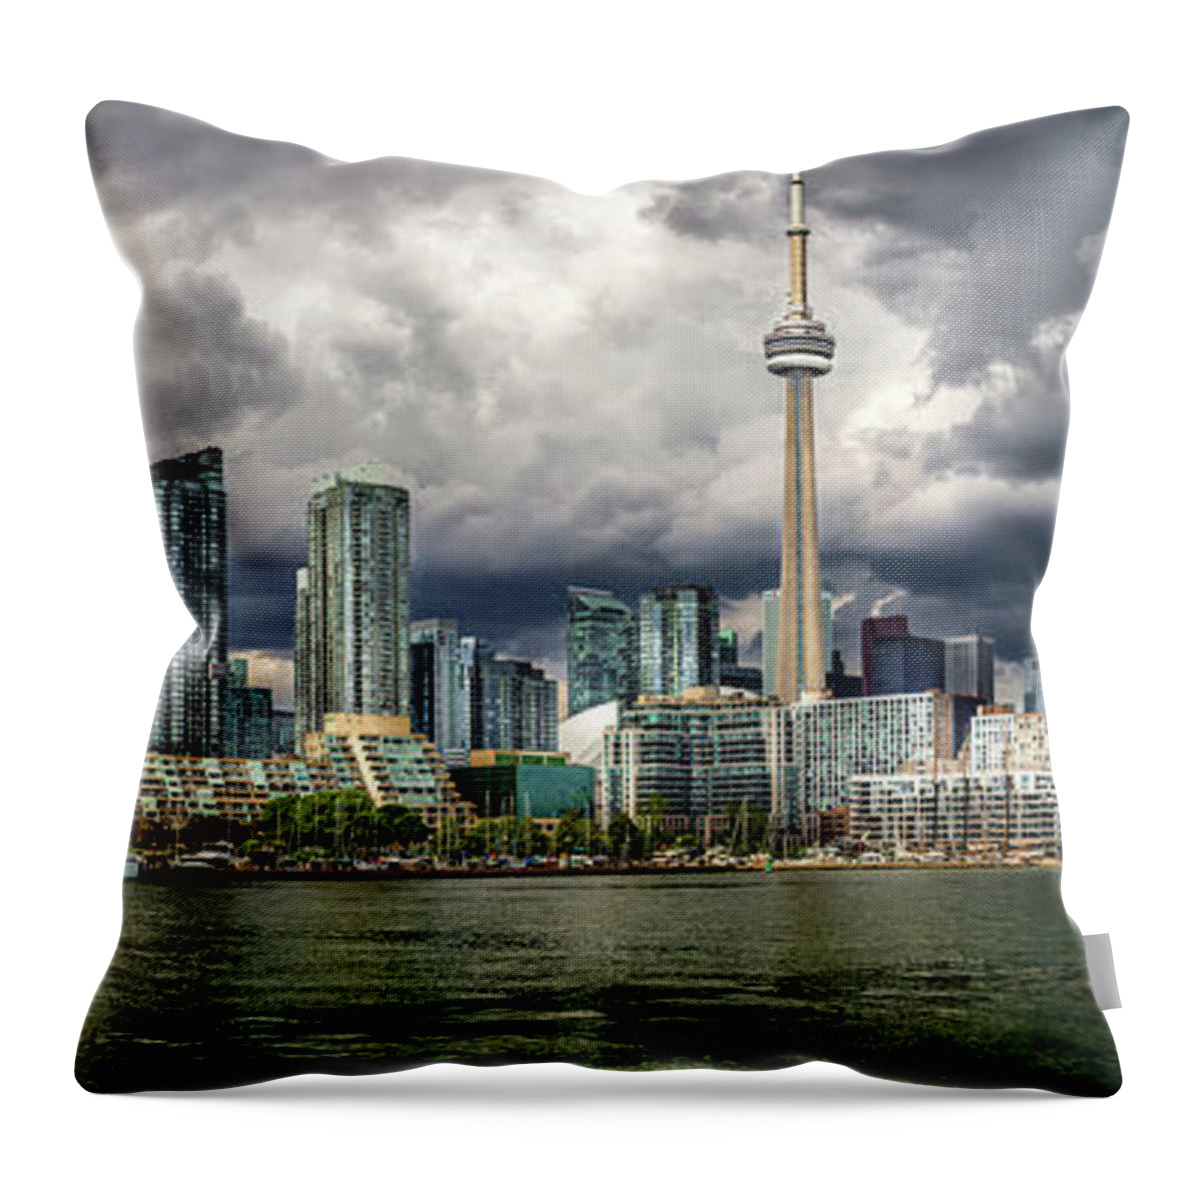 Toronto Skyline Throw Pillow featuring the photograph Toronto Skyline by M G Whittingham